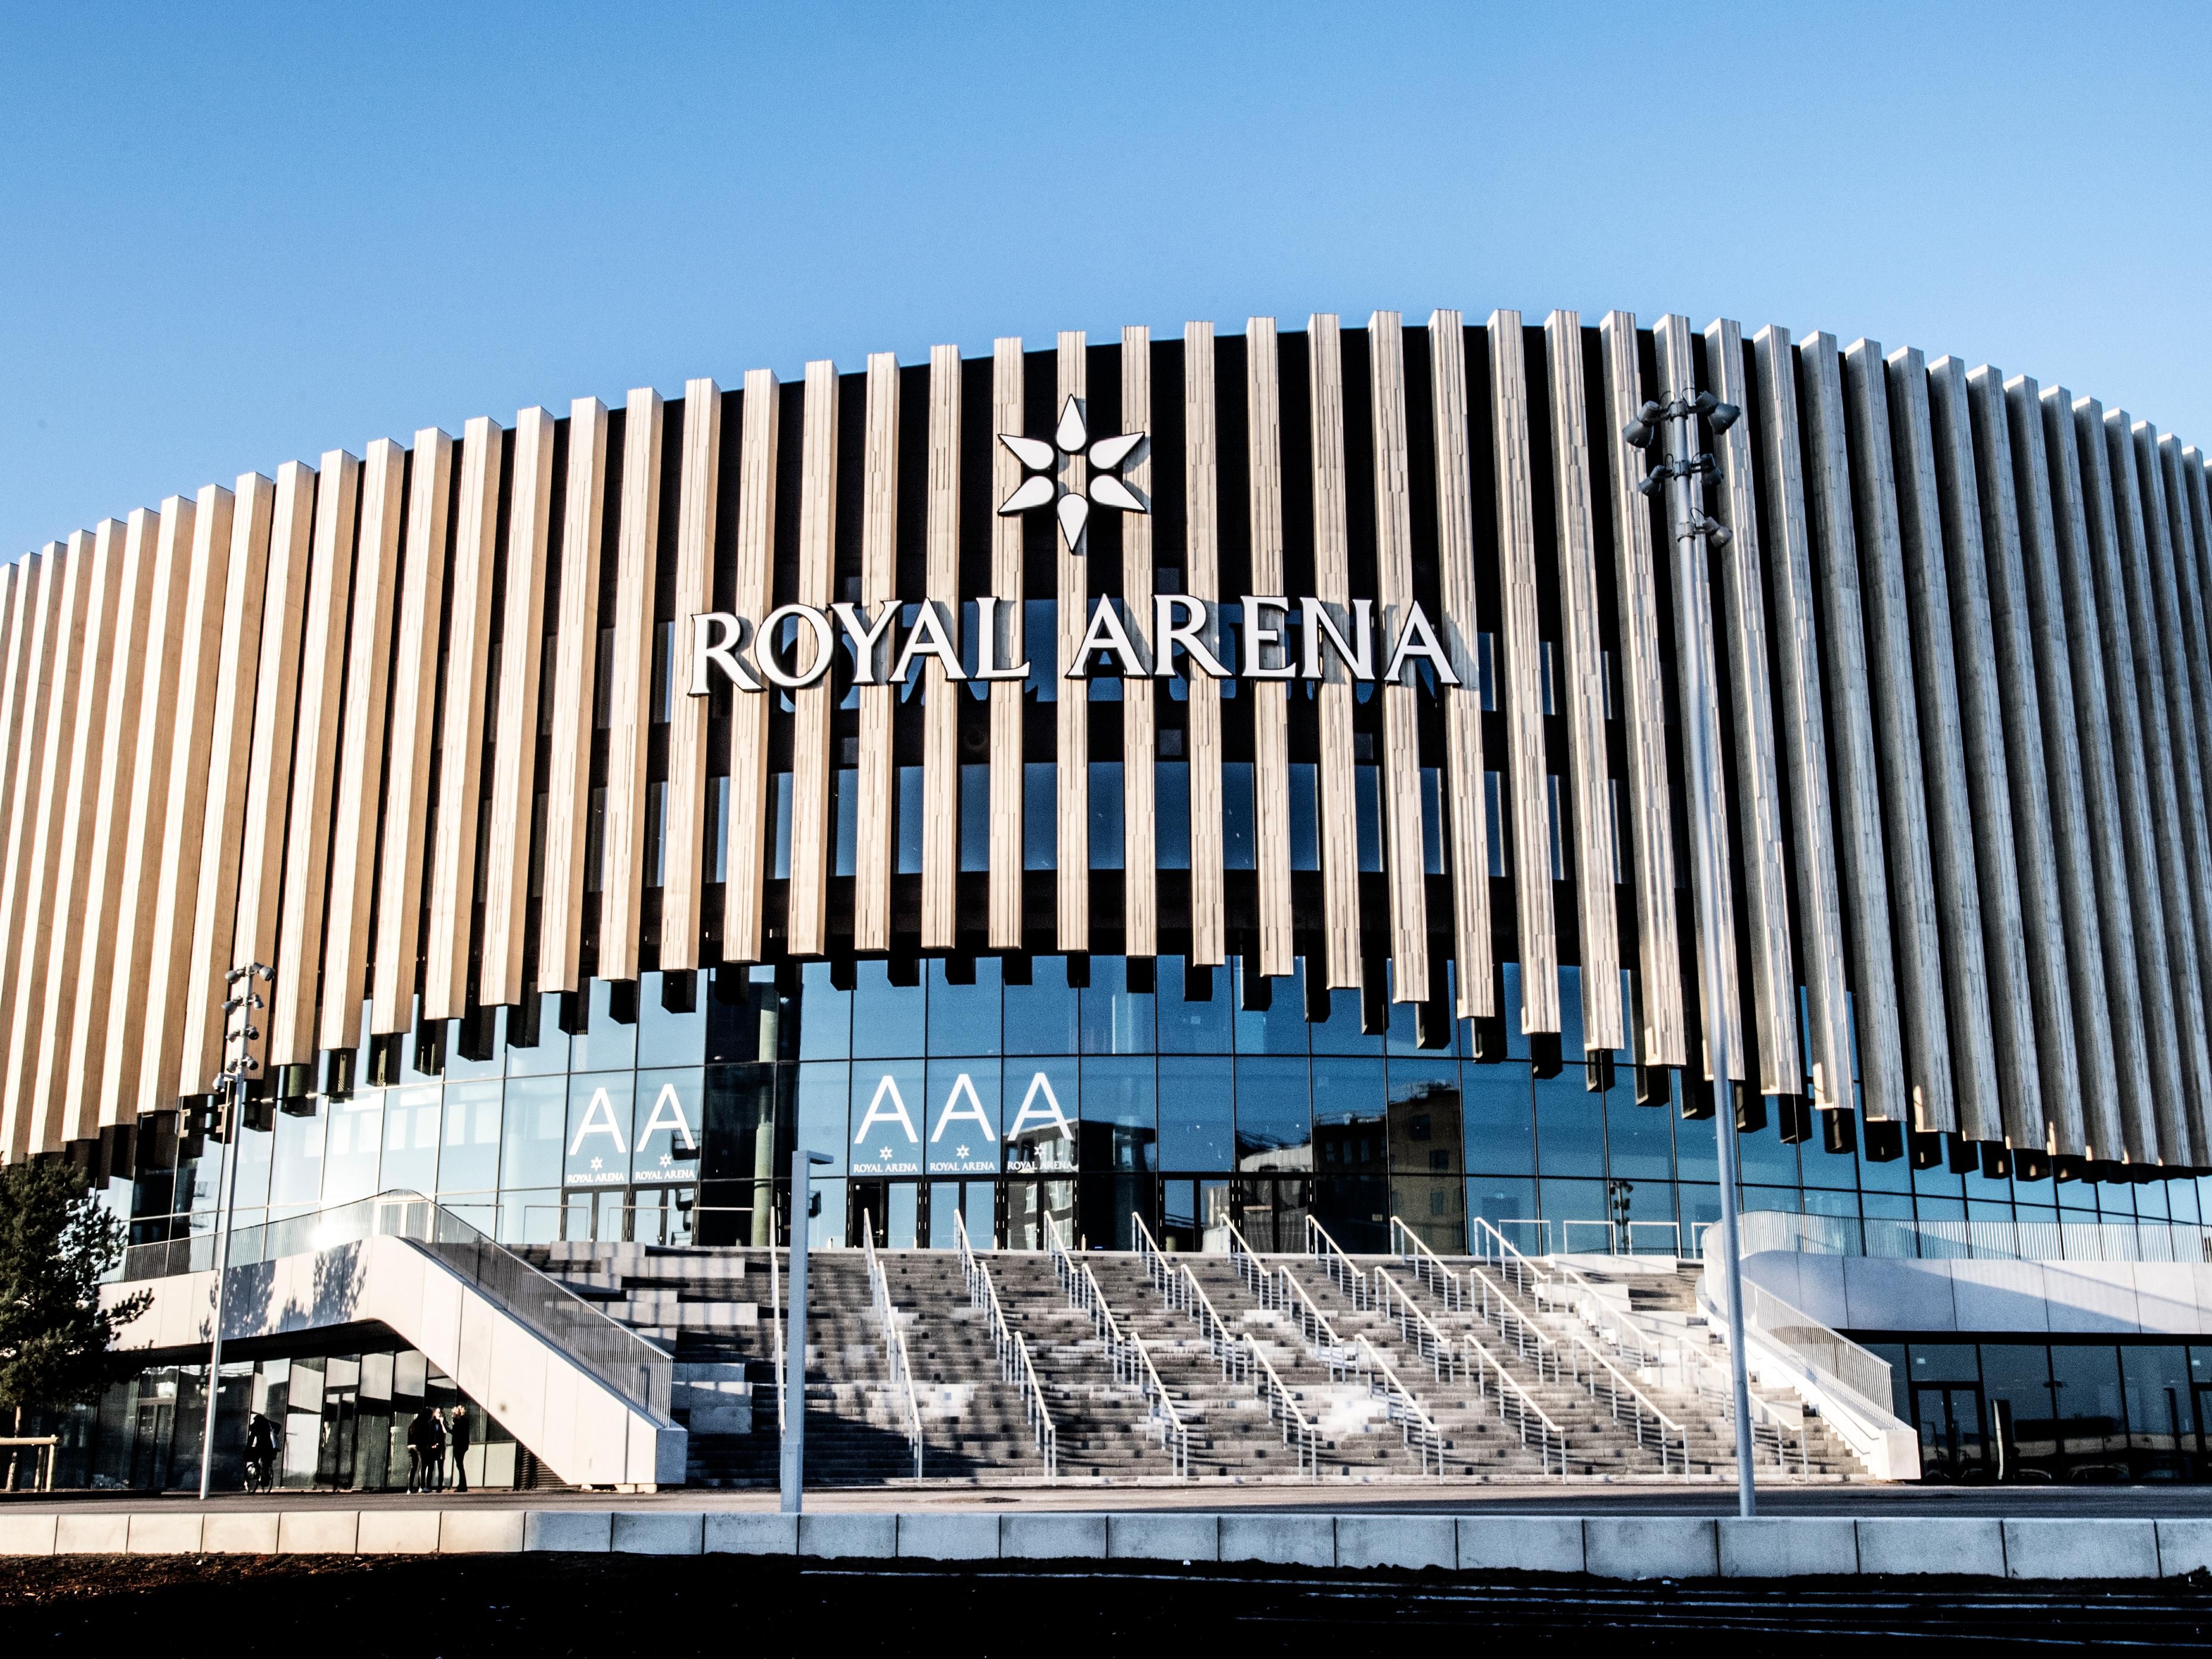 Visiting Royal Arena?